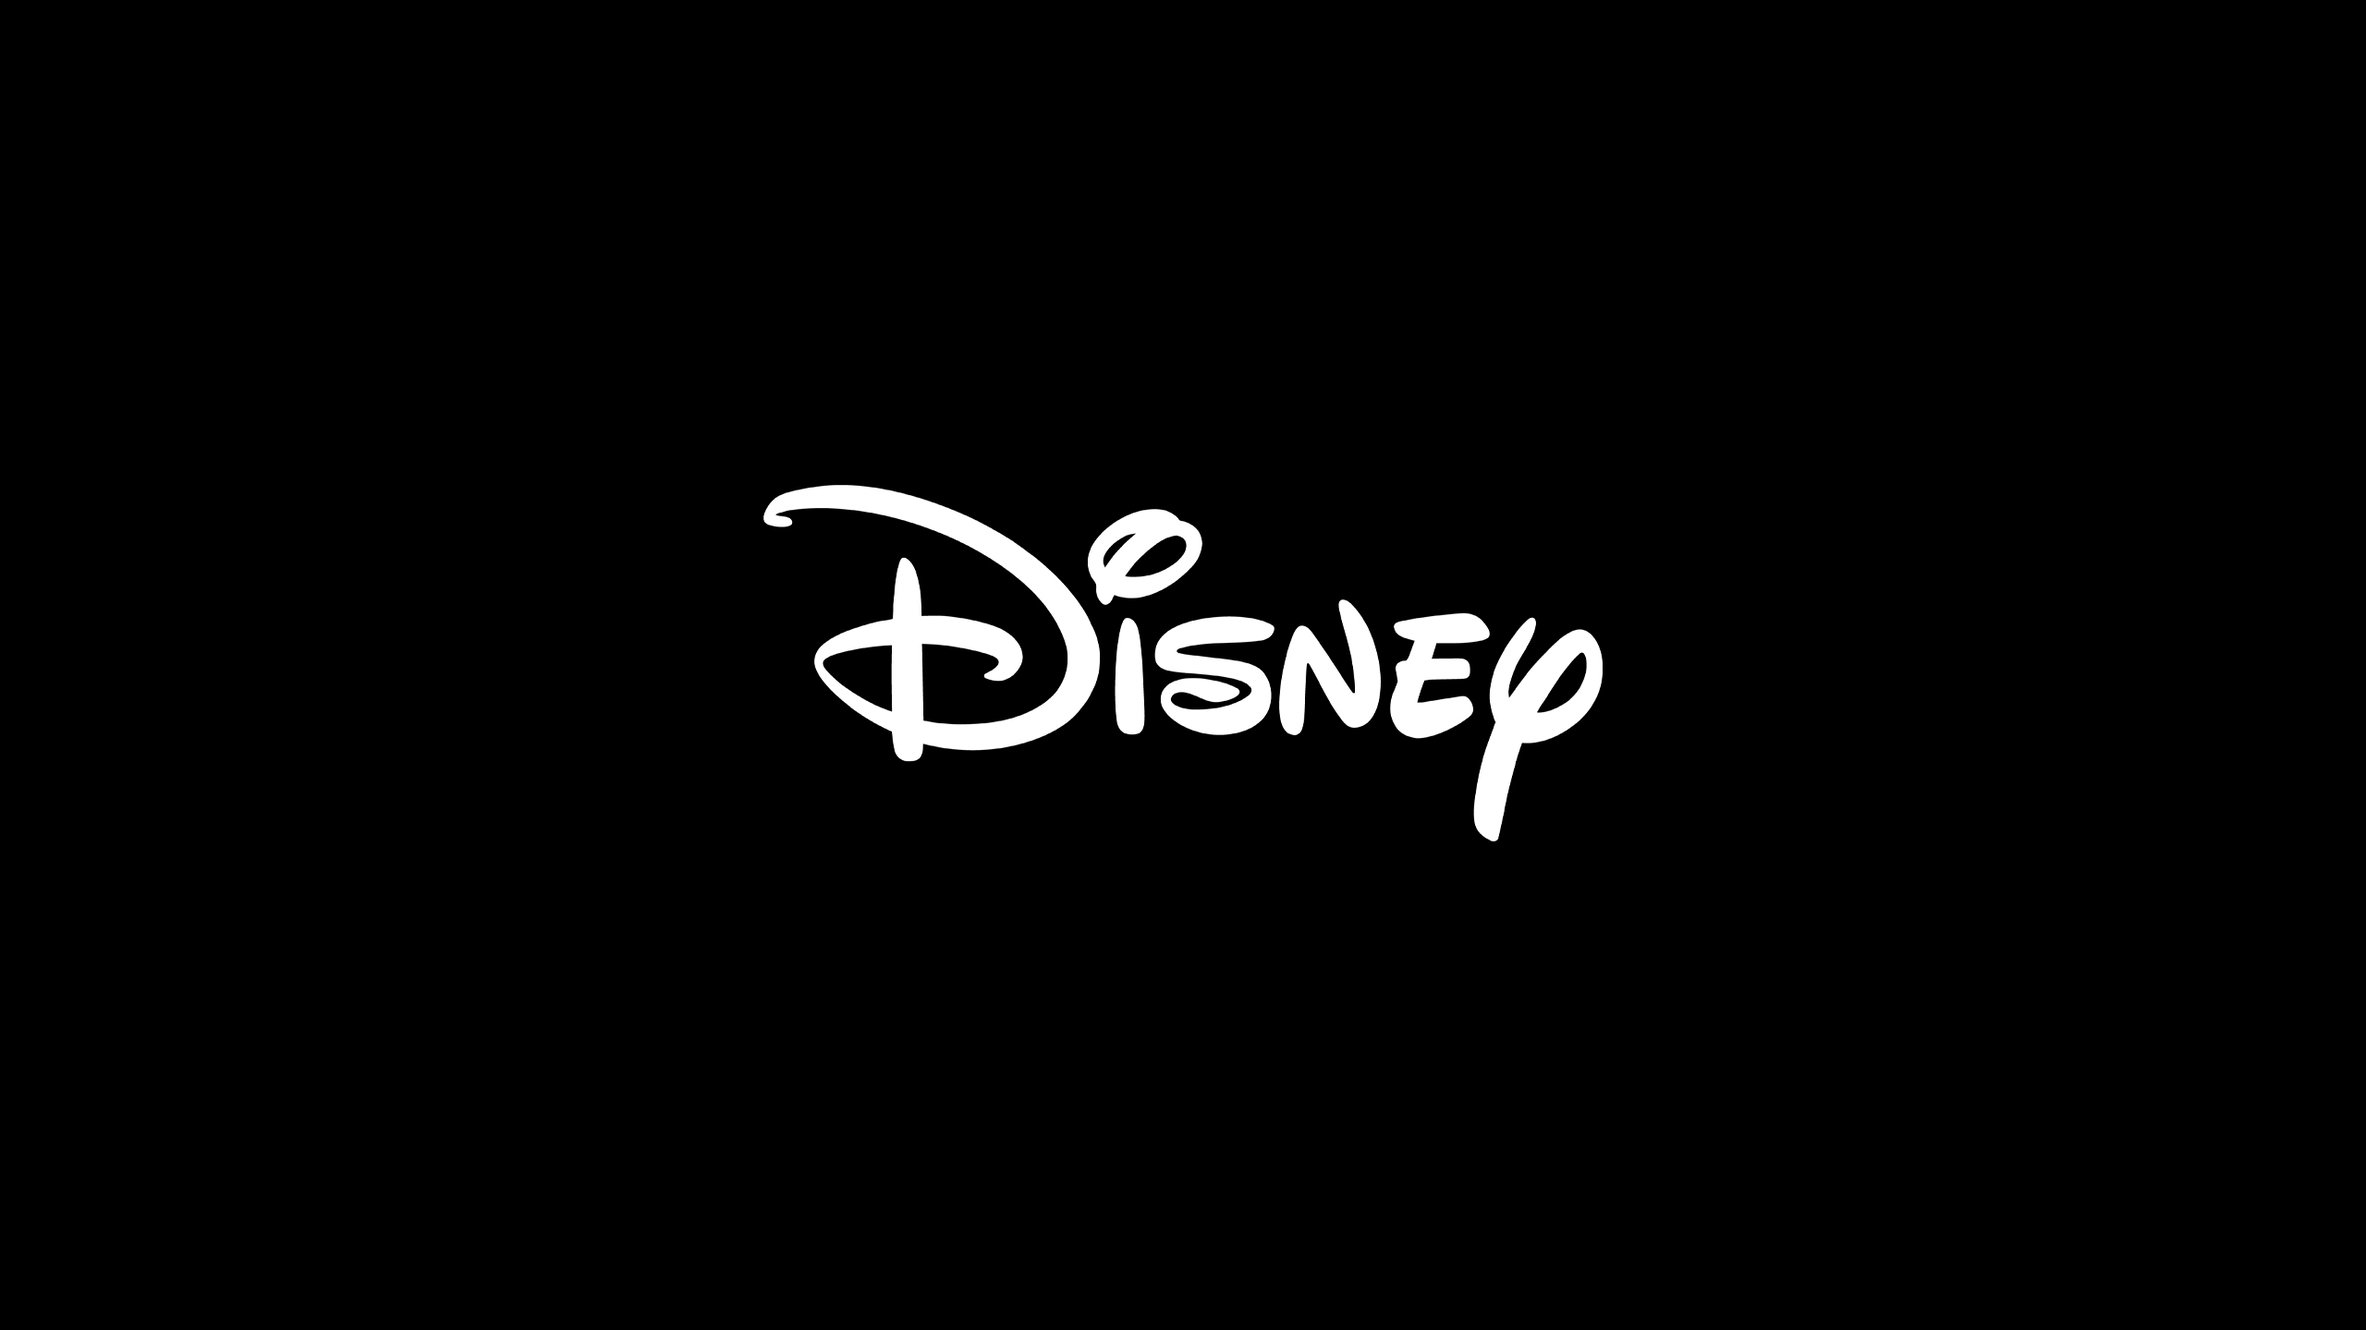 Disney Film Family Casting